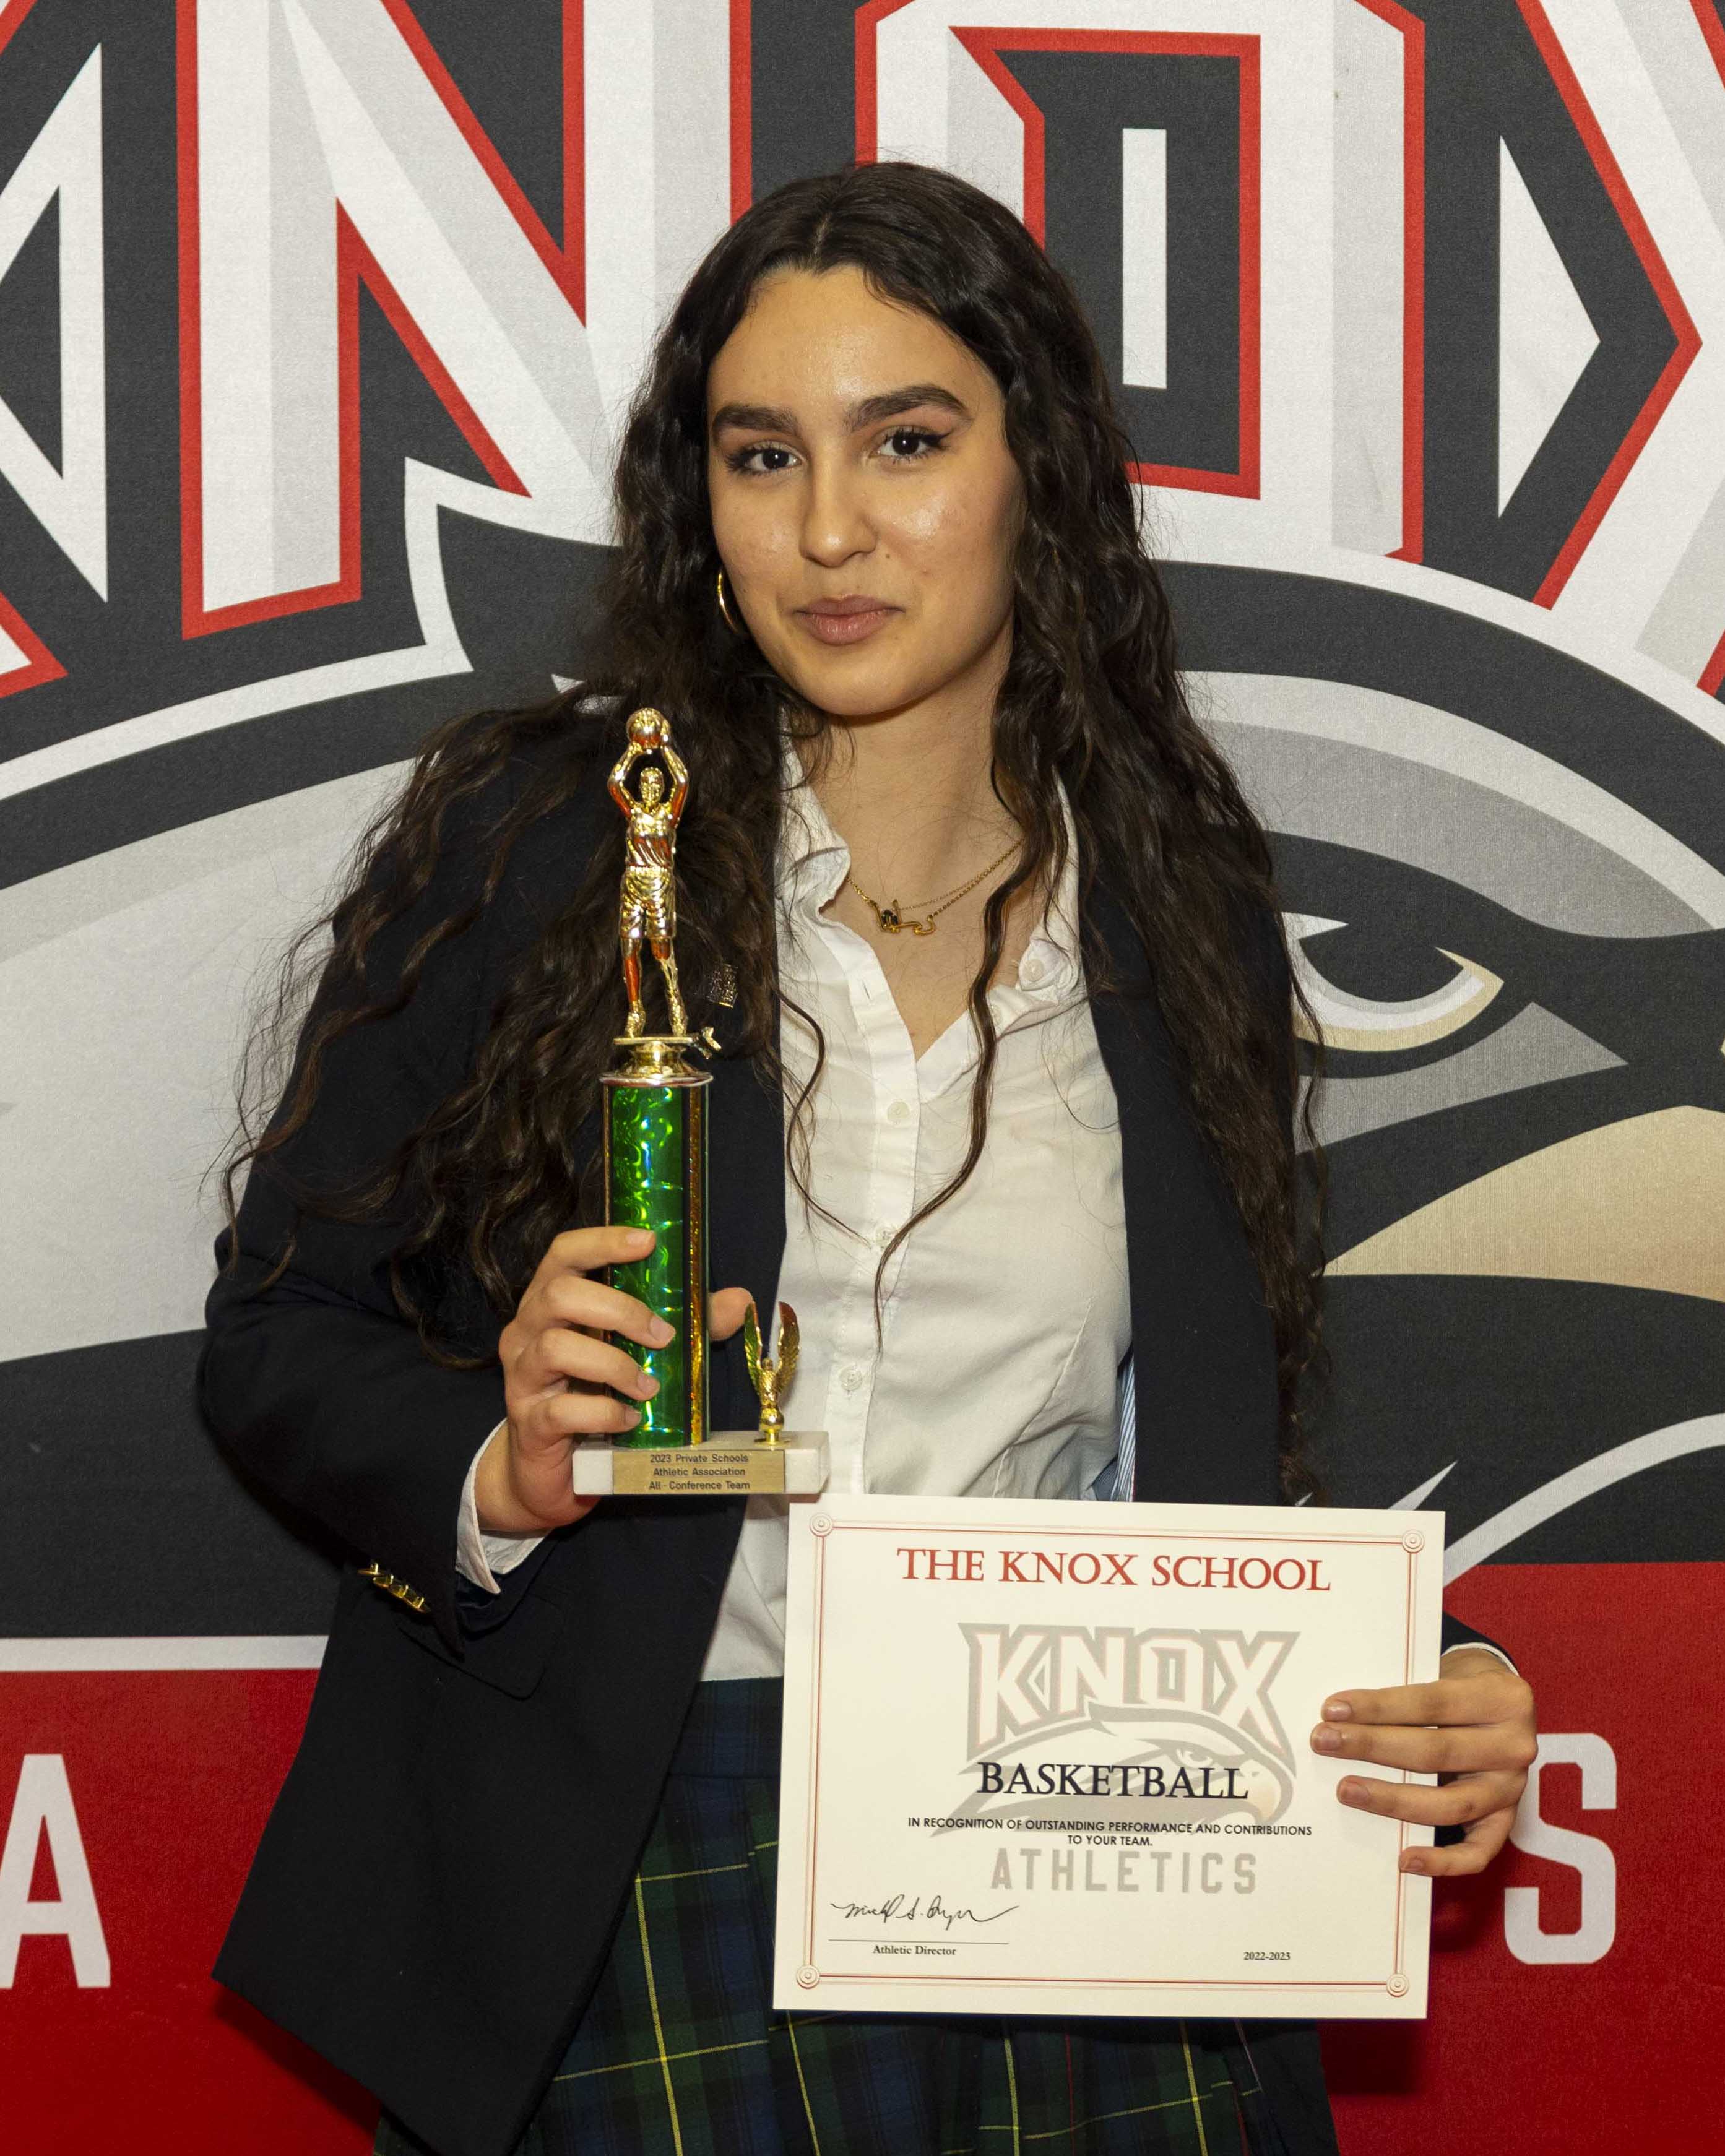 Knox Girls Basketball Athletic Awards